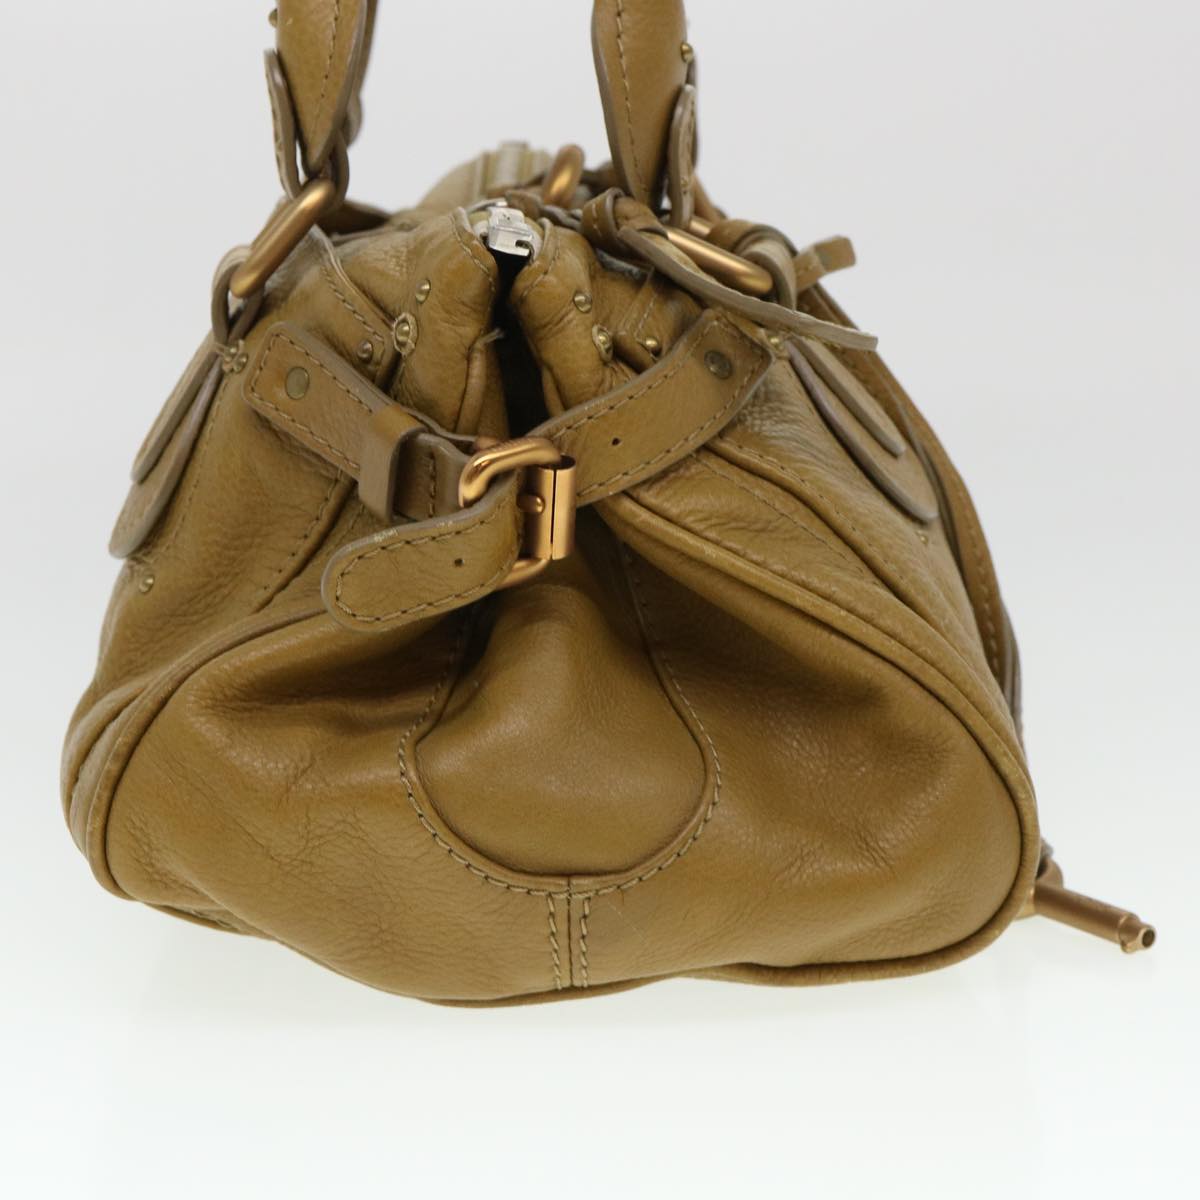 Chloe Paddington Hand Bag Leather Beige 03 06 51 5366 Auth 38736